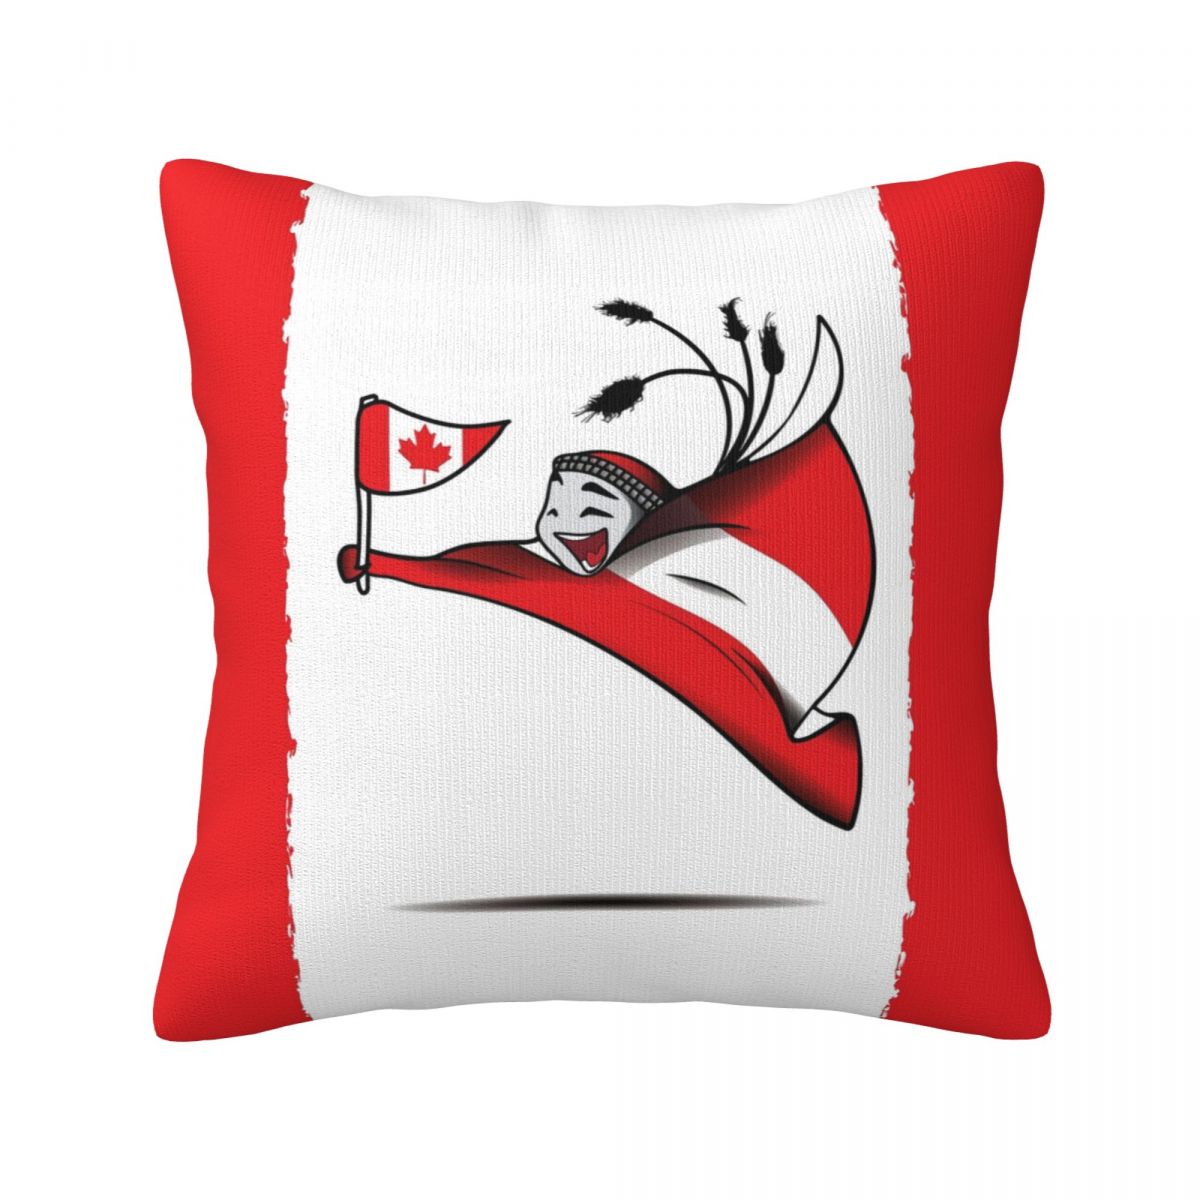 Canada World Cup 2022 Mascot Throw Pillows 18 x 18 inch